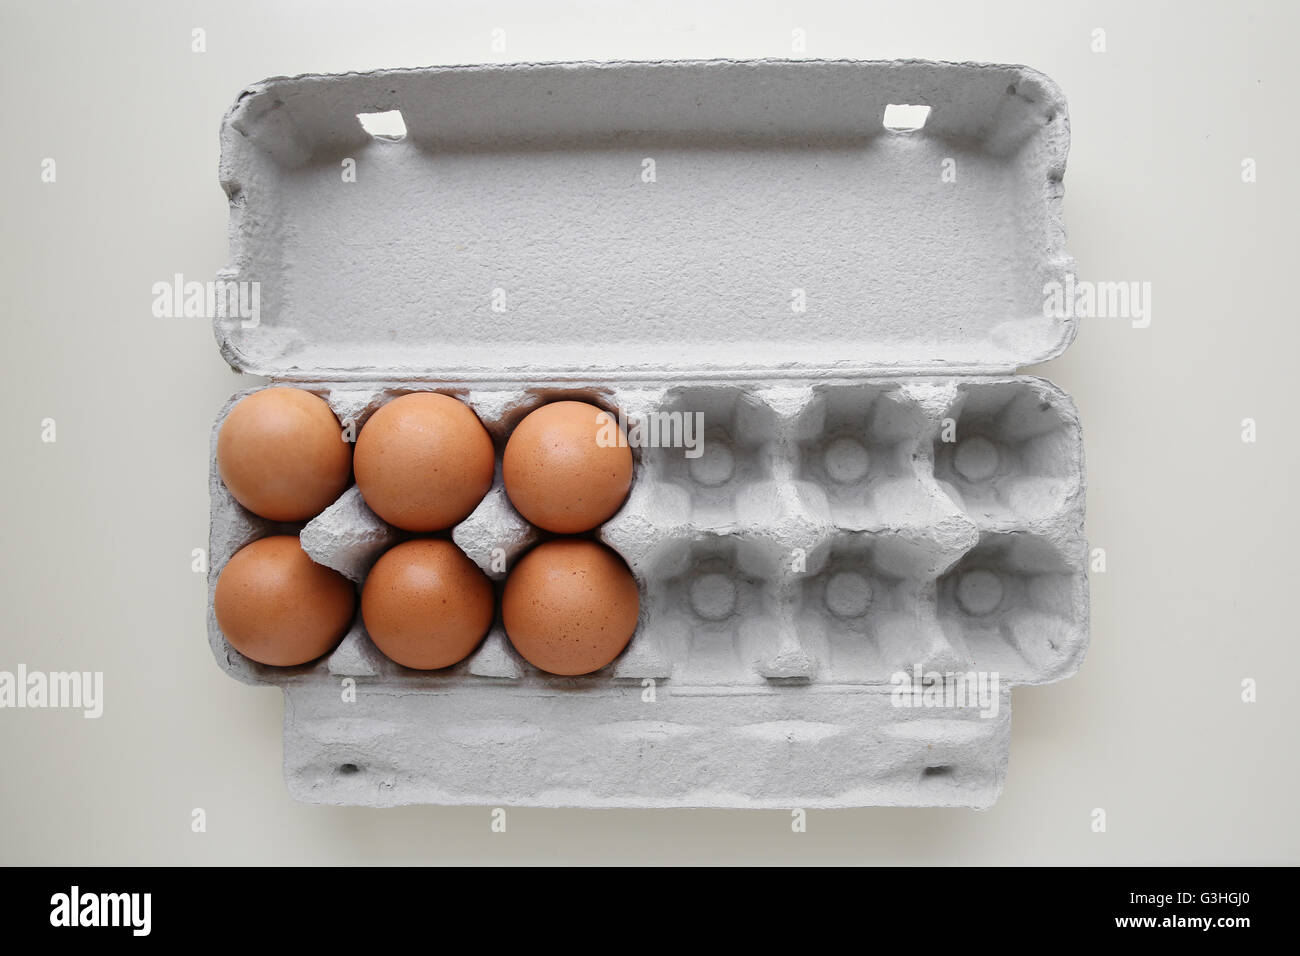 Eggs in packaging, missing eggs, half empty half full Stock Photo